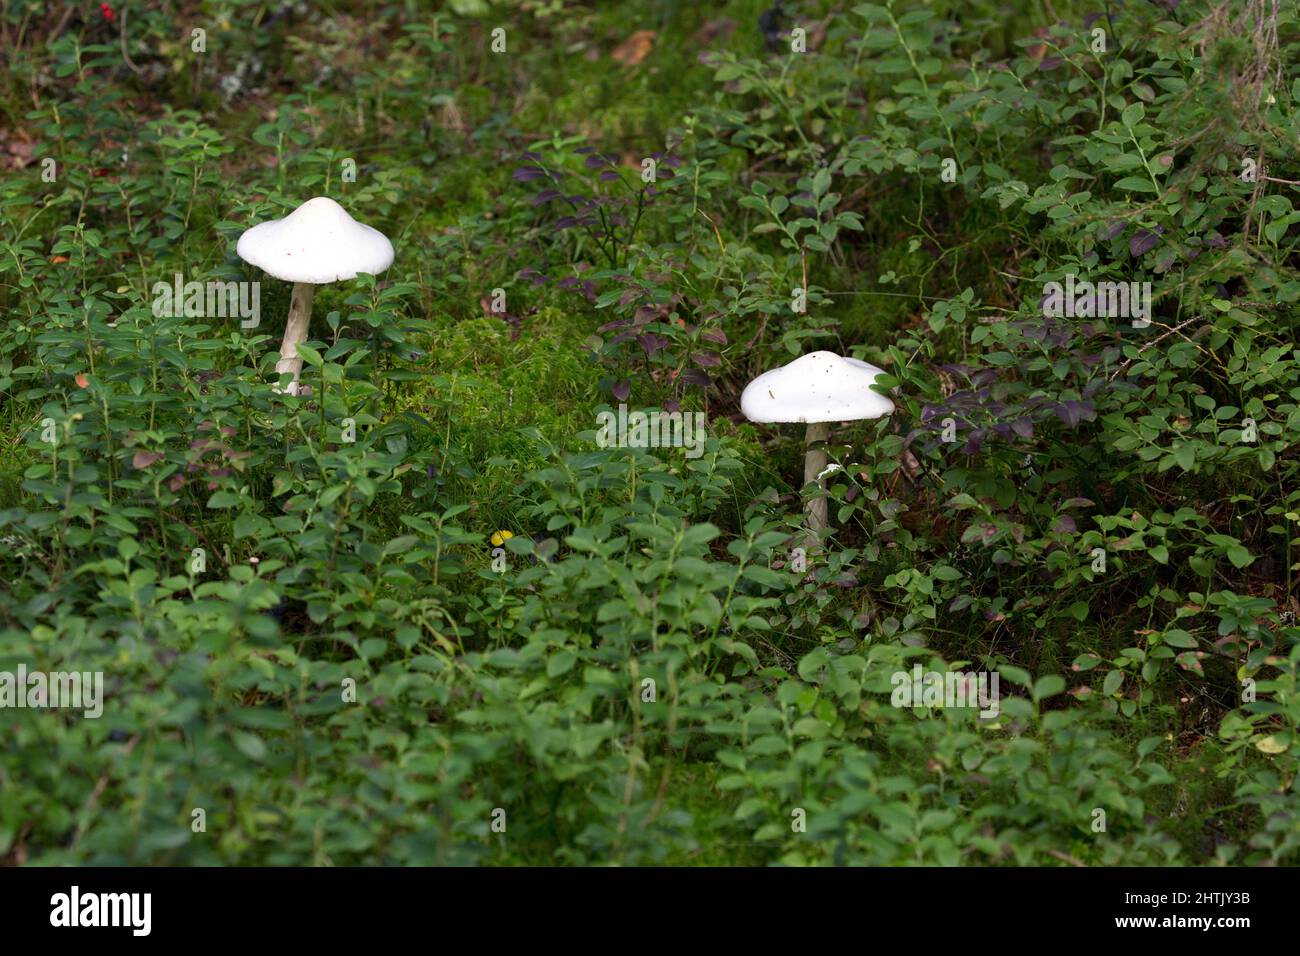 View of amanita bisporigera deadly poisonous mushroom, Finland Stock Photo